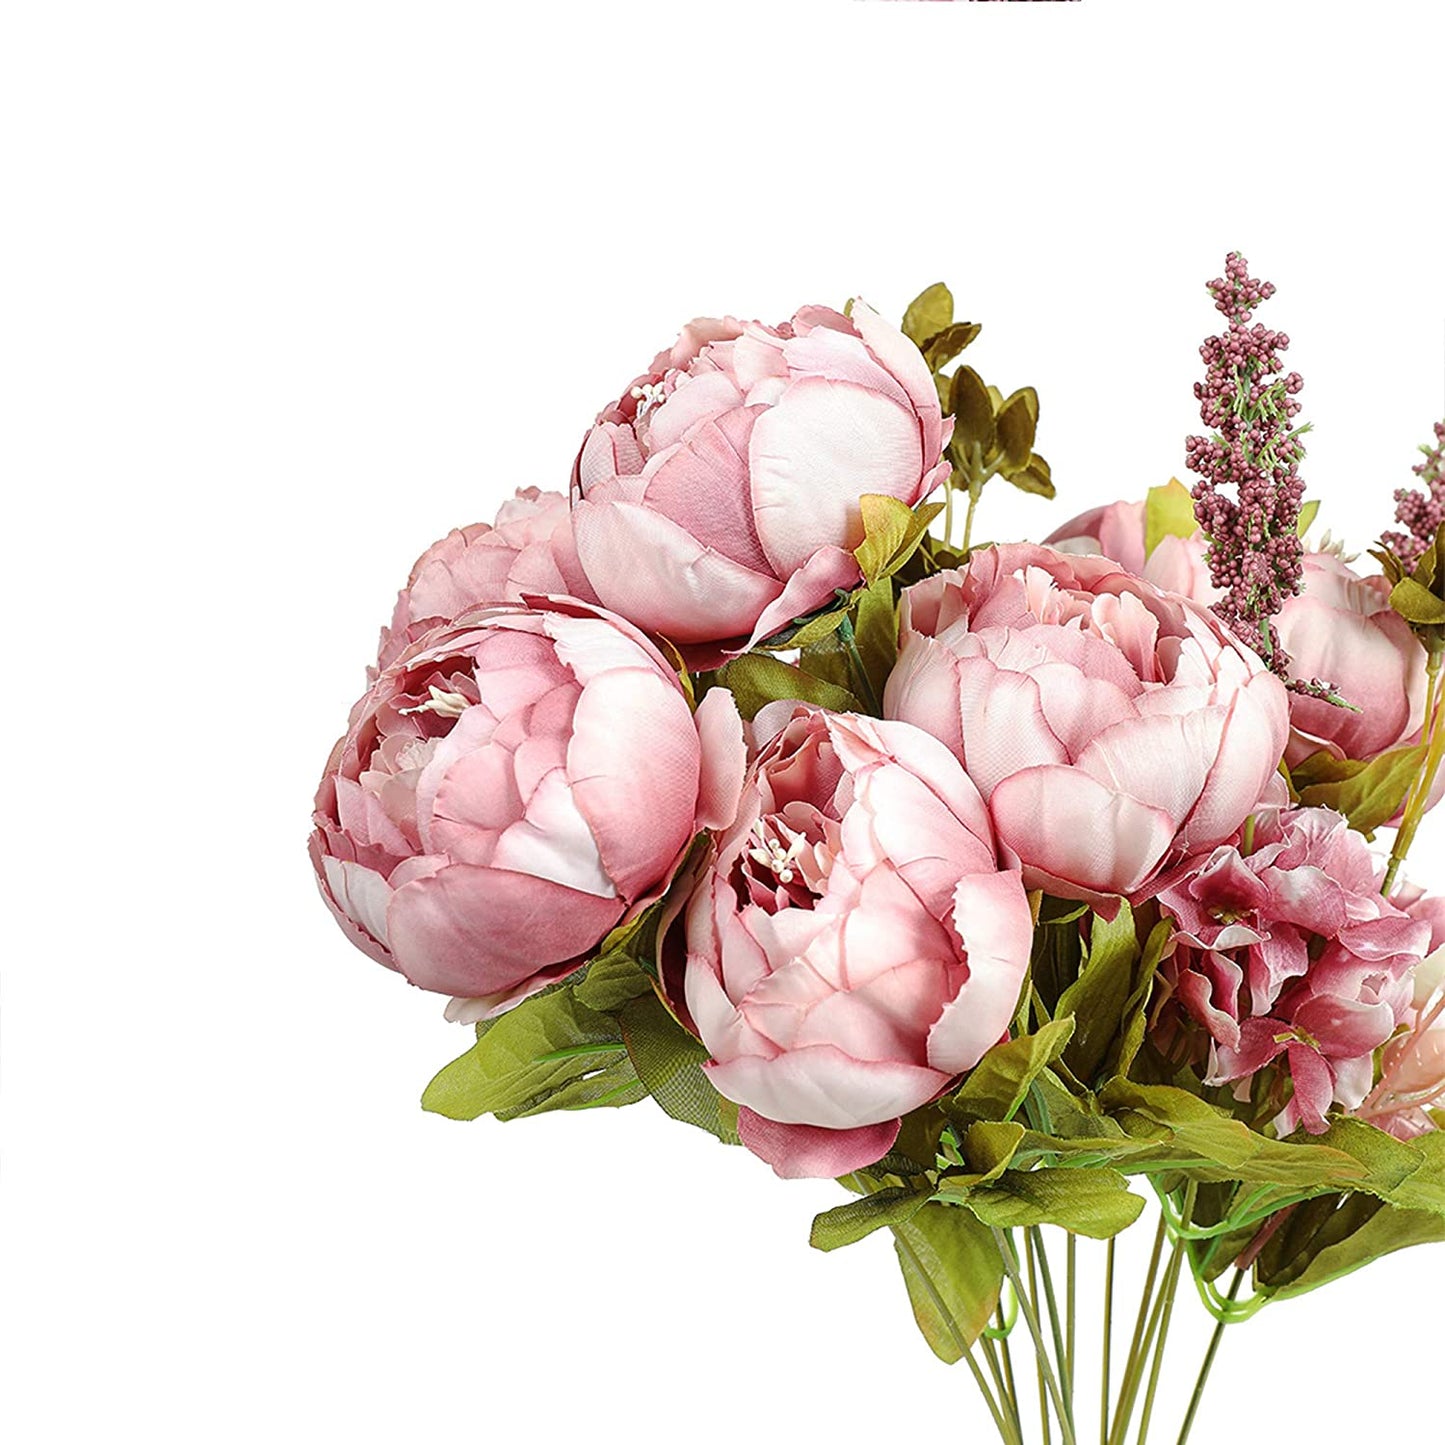 Vintage Peonies -  Artificial Peony Flowers - Peony Bouquet Flowers - Silk Peony Flowers - Floral Stems - Artificial Peonies